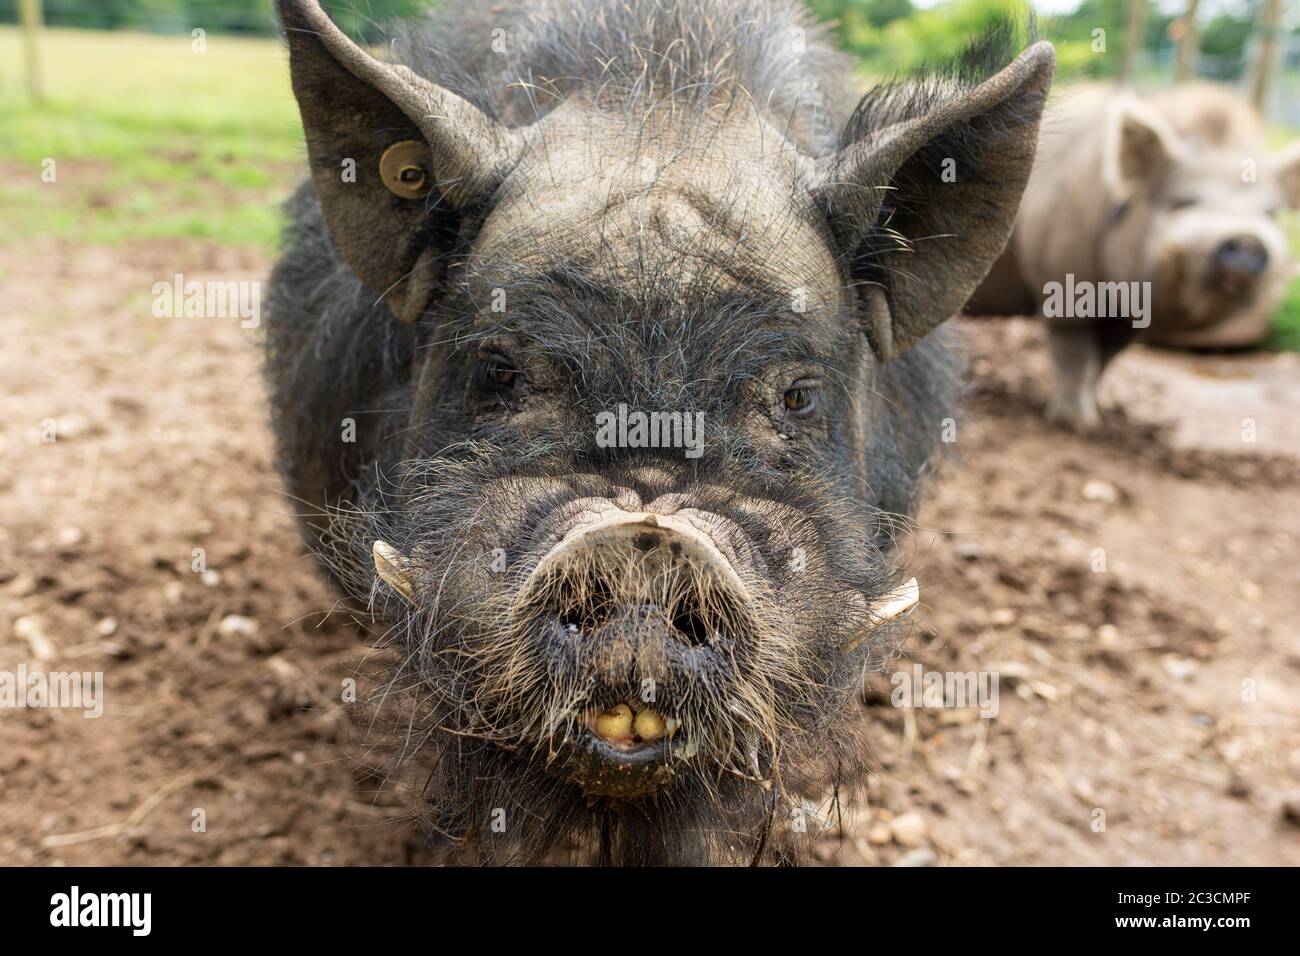 Close up of Kune Kune pig face Stock Photo